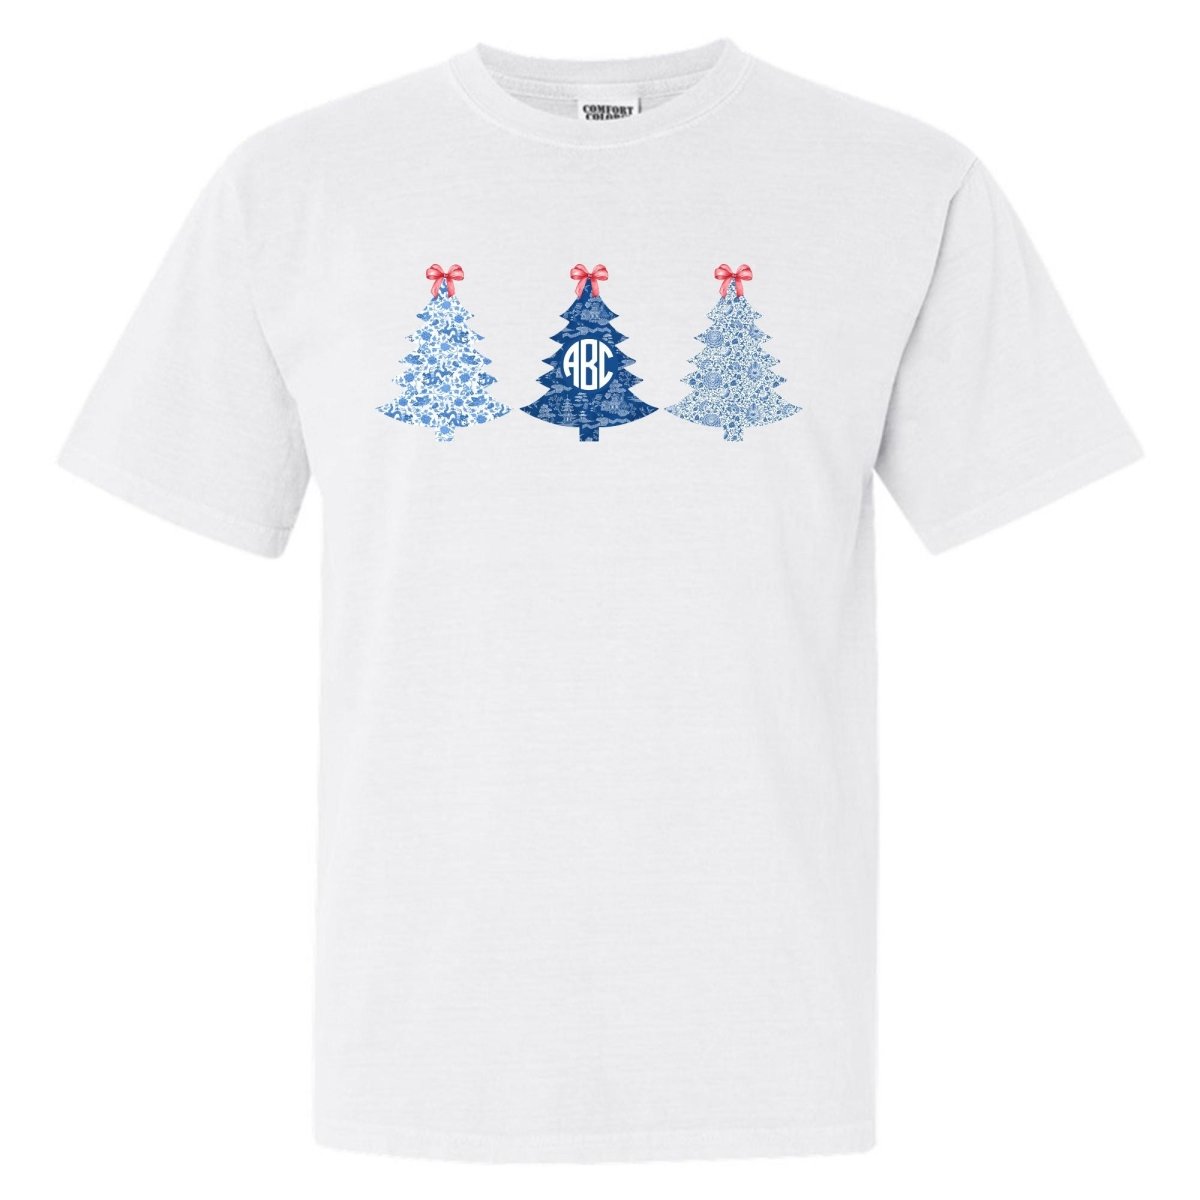 Monogrammed 'Chinoiserie Christmas Trees' T - Shirt - United Monograms